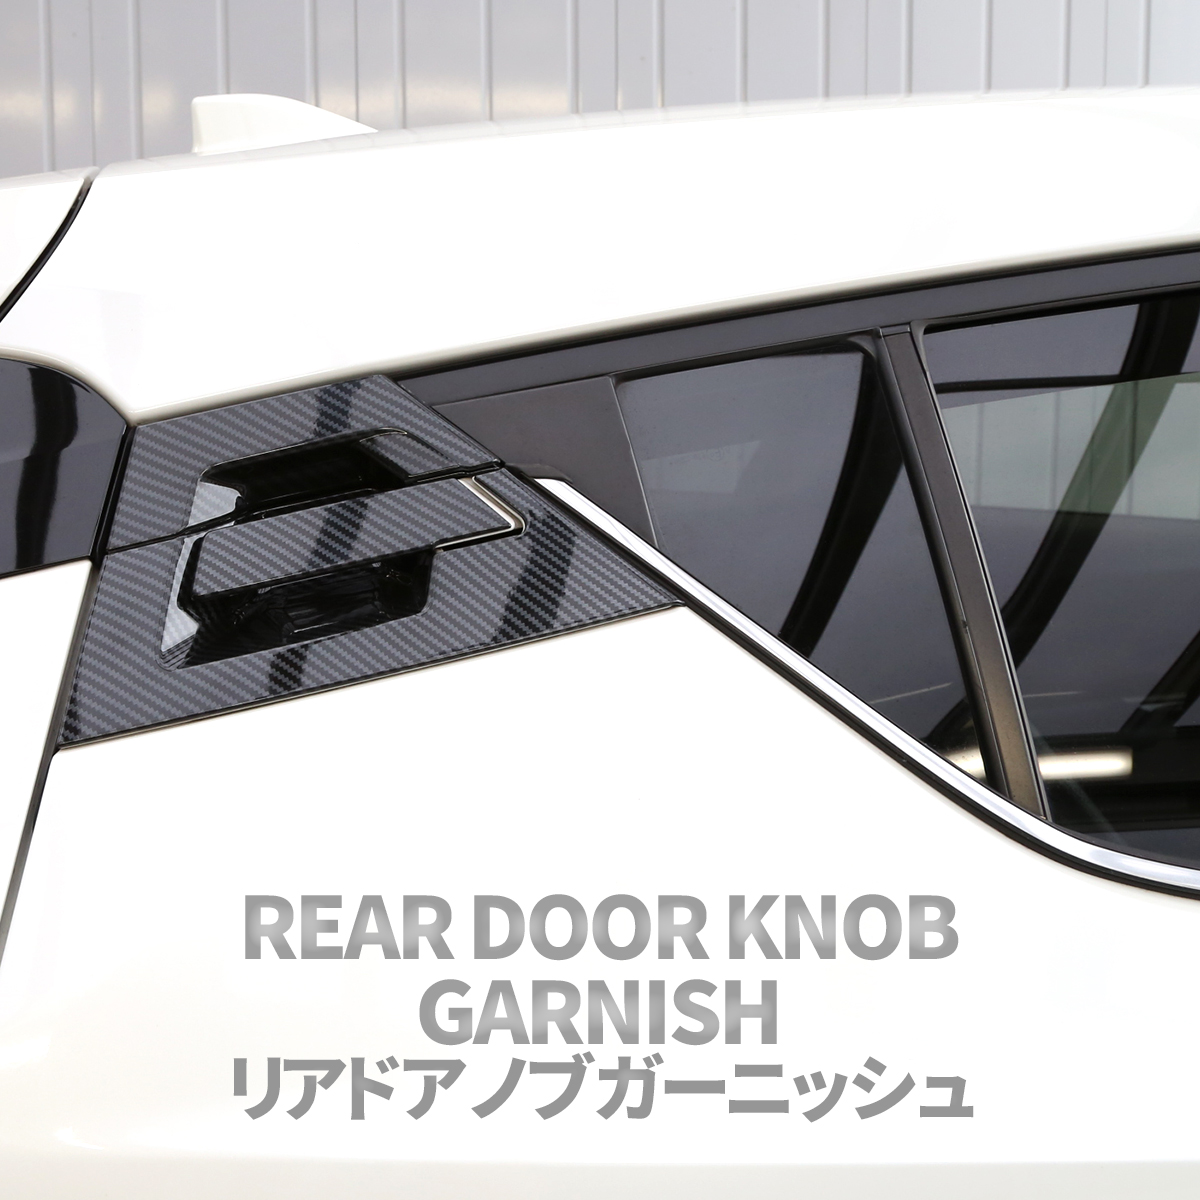 C-HR 前期 後期 専用設計 リア ドア ノブ ガーニッシュ ABS樹脂製 カーボン調 ハンドル カバー ZYX10 ZYX11 NGX10 NGX50 LB0005